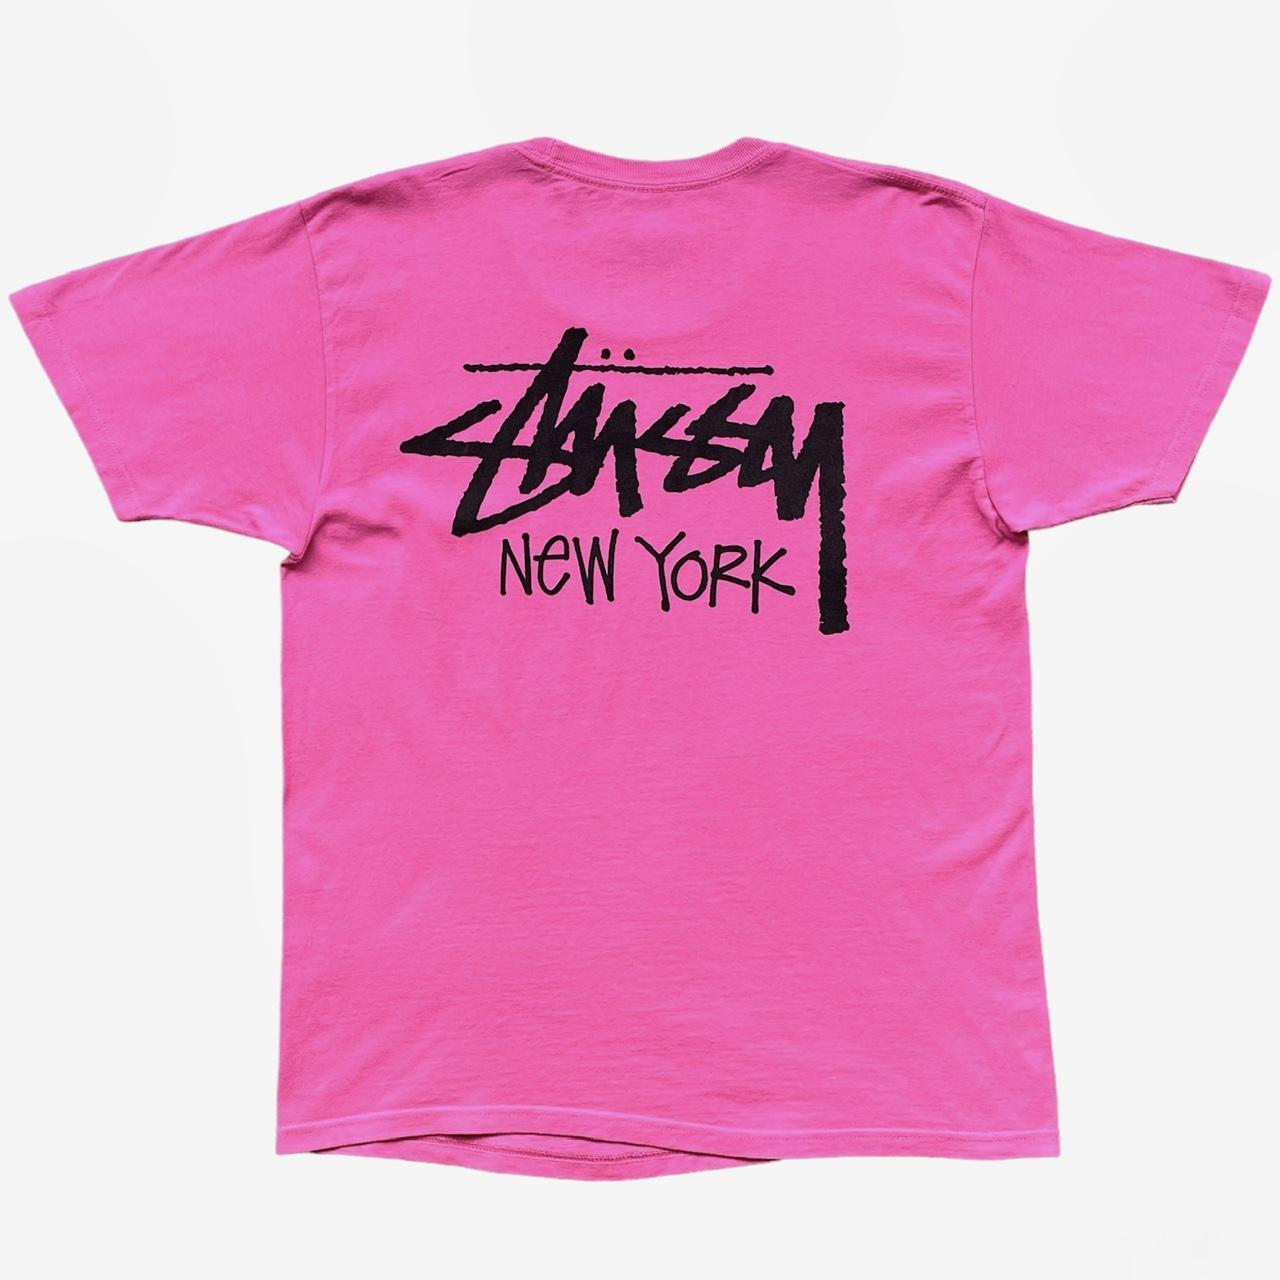 Vintage Stussy New York T-Shirt in size medium. Pink... - Depop